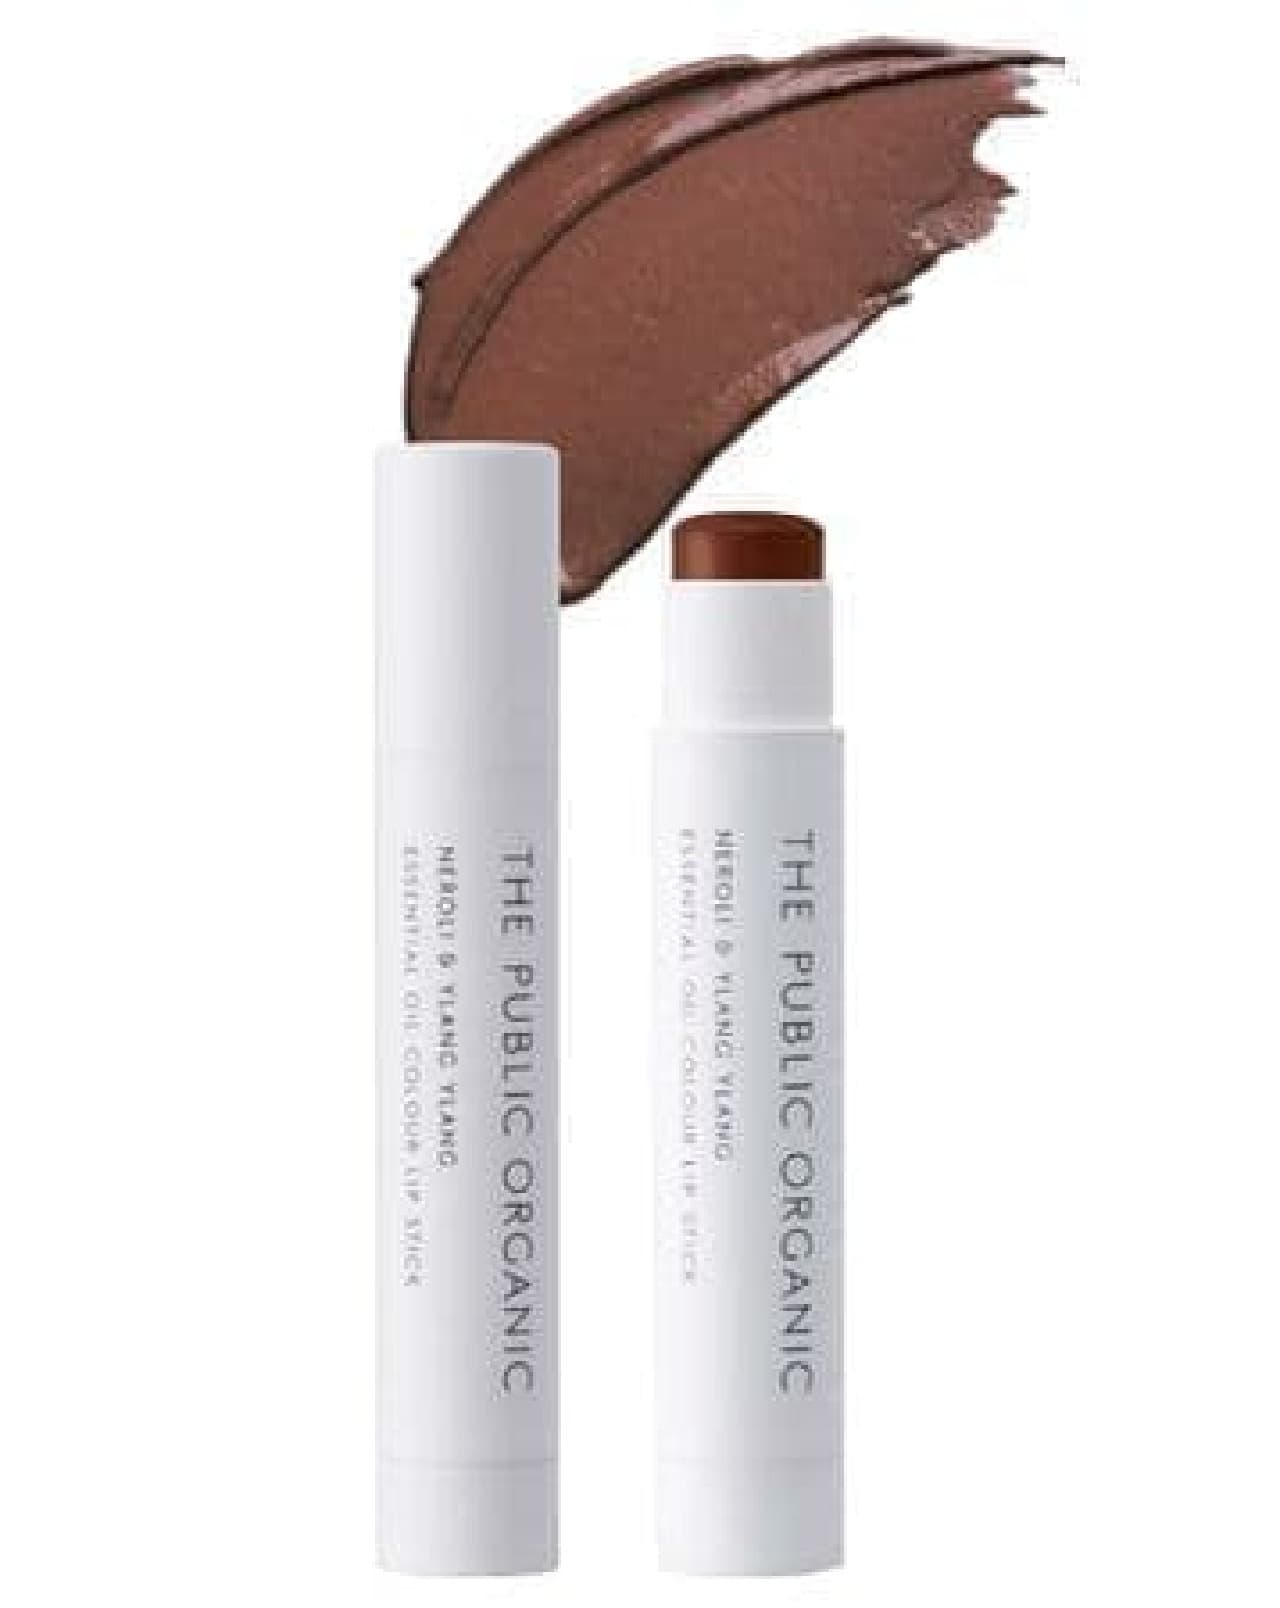 Limited color "Urban Brown" of "The Public Organic Super Feminine Color Lipstick"